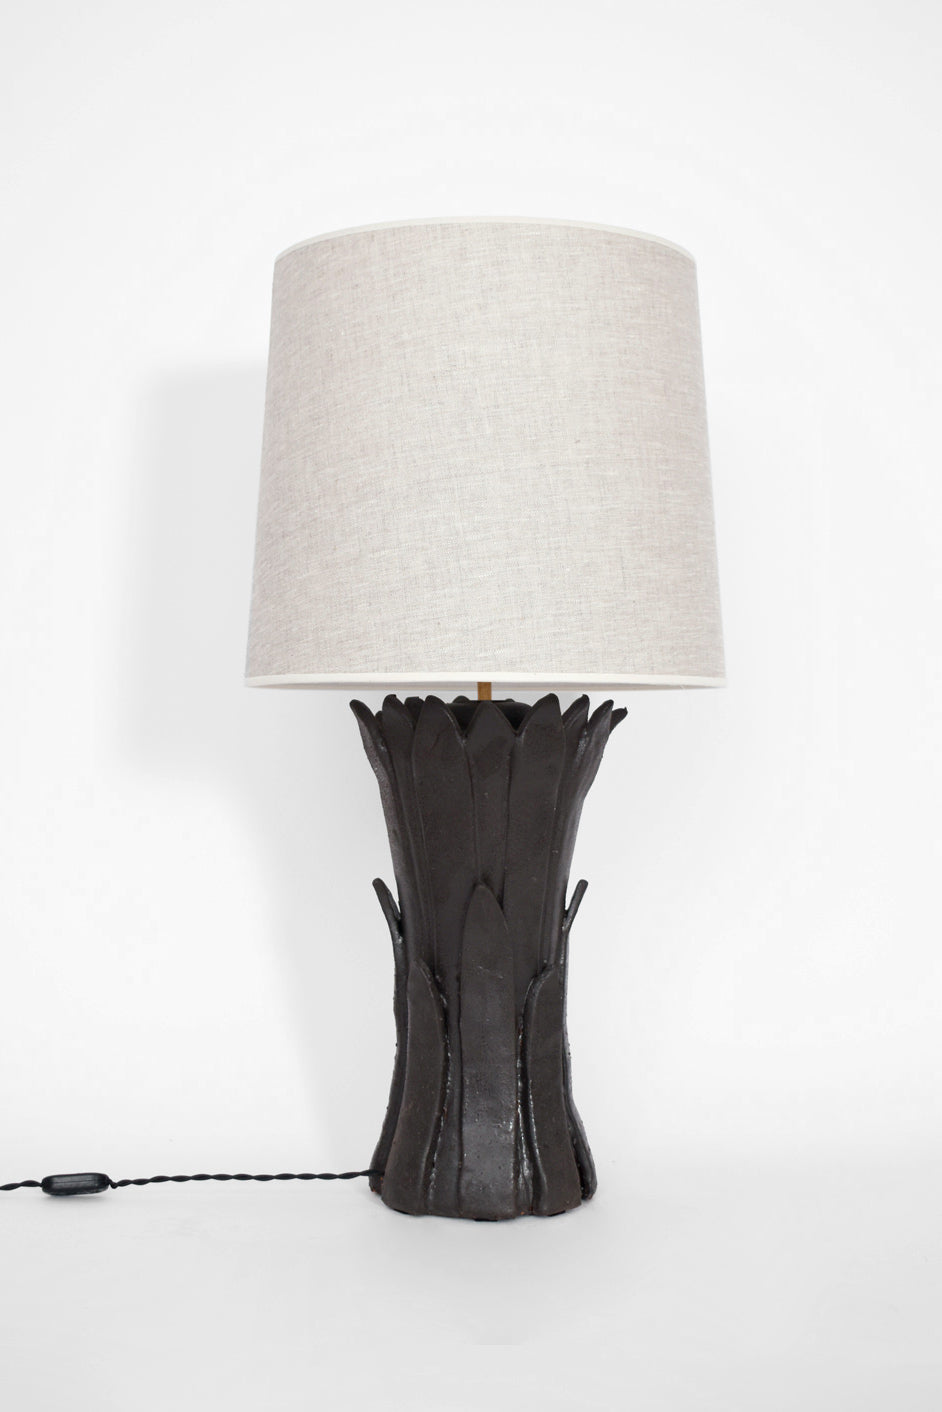 "Sintra" 43cm black lamp, Barracuda edition.